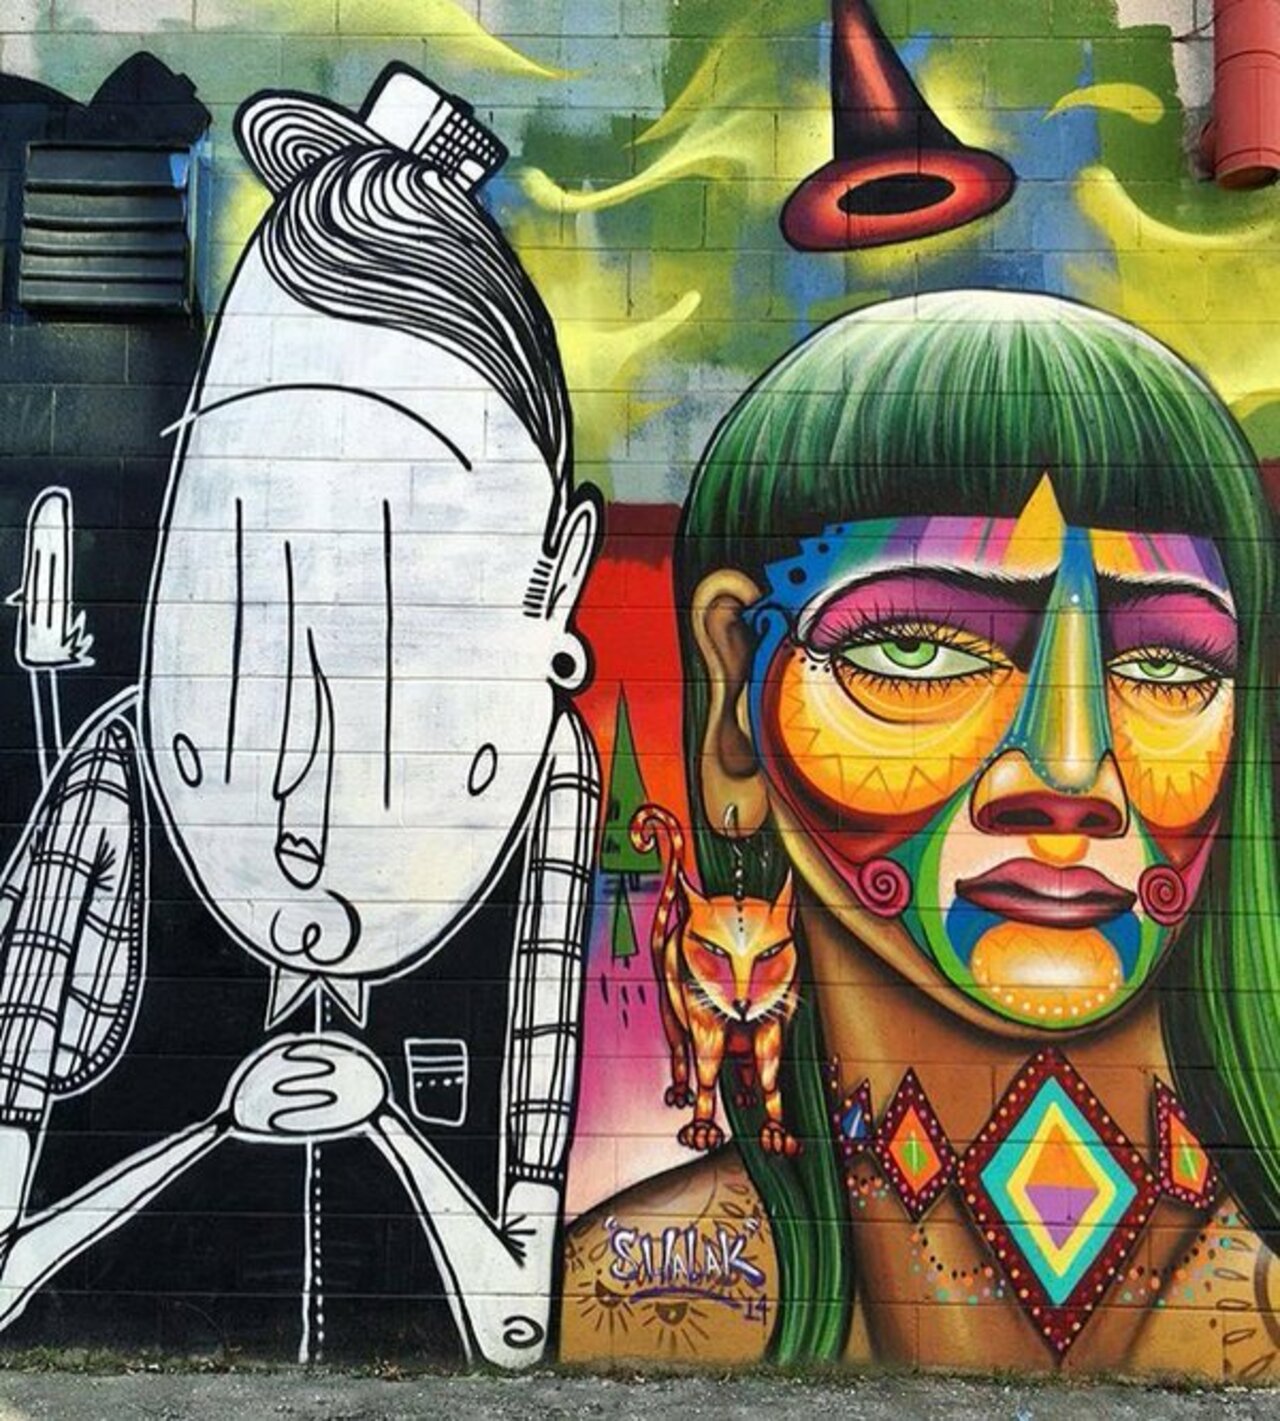 Street Art • Alex Senna & Shalak Attack located in Toronto #art #graffiti #mural #streetart https://t.co/QH8pIZEK1O